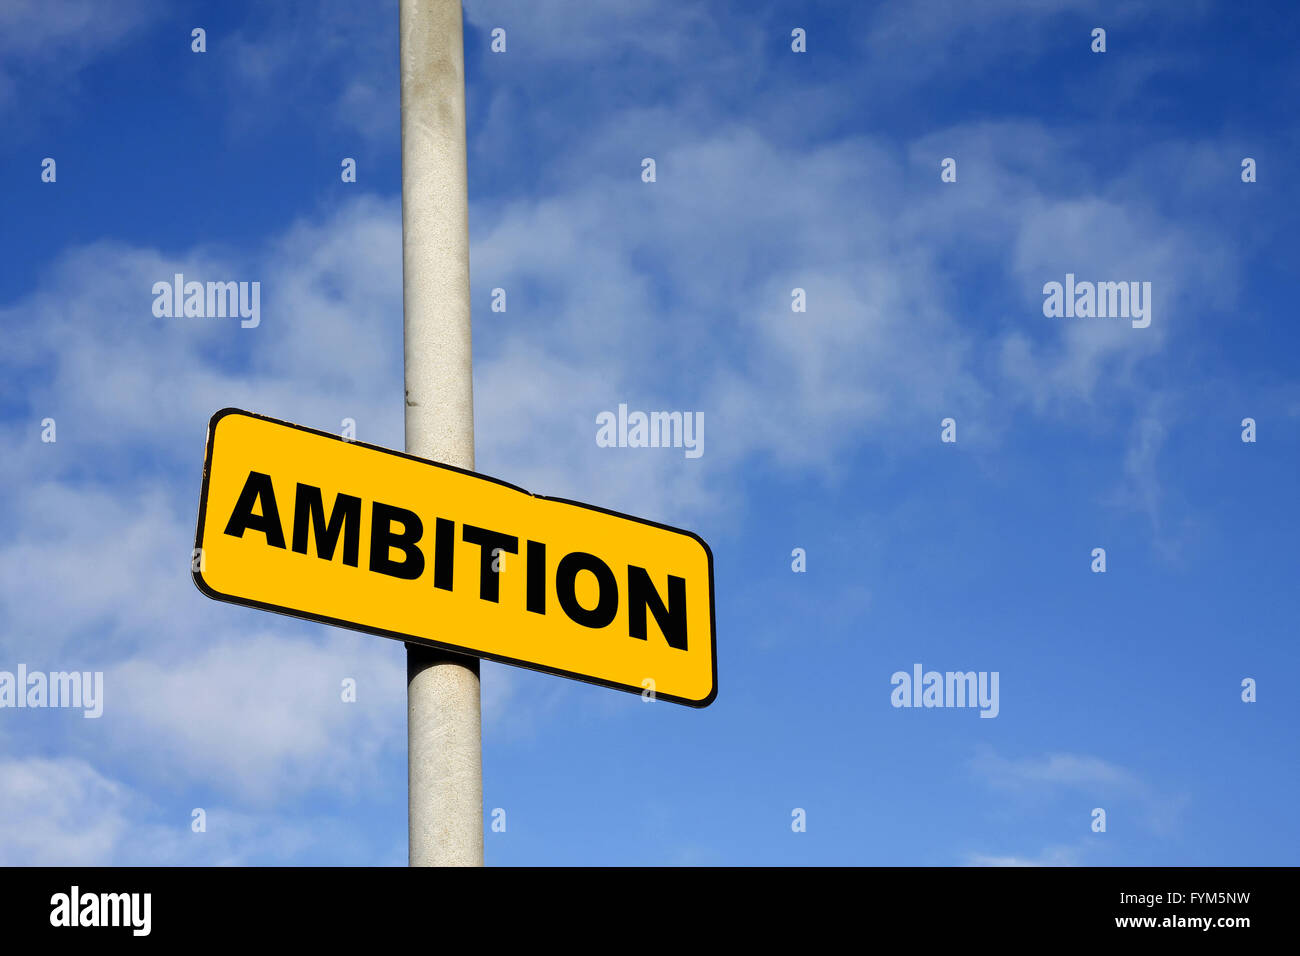 Yellow Ambition sign Stock Photo